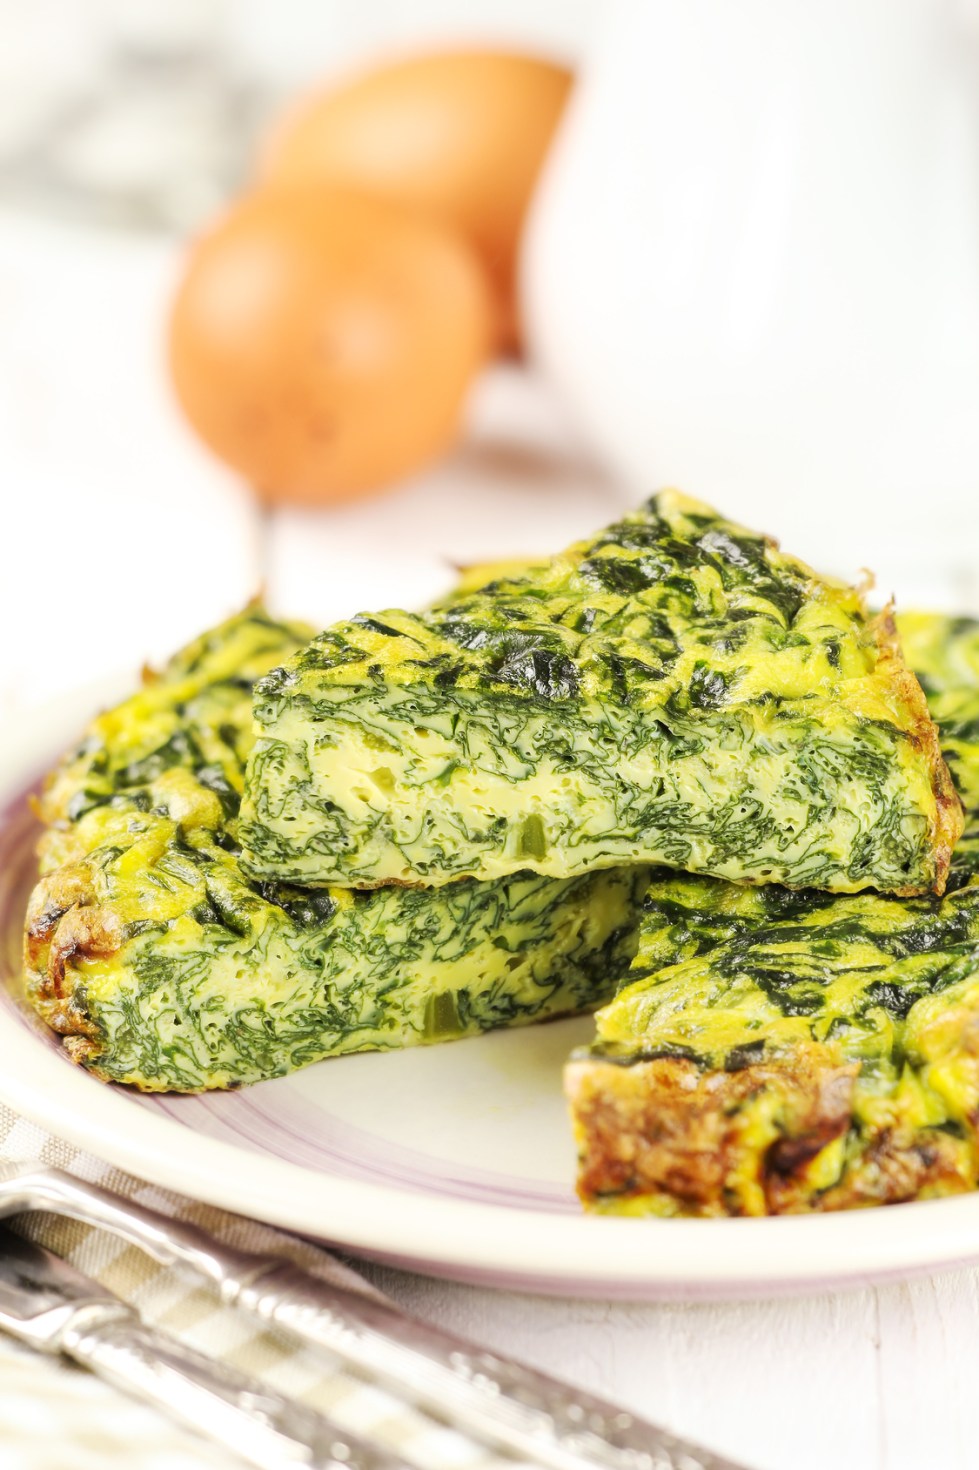 Homemade Italian spinach or Swiss chard frittata omelet